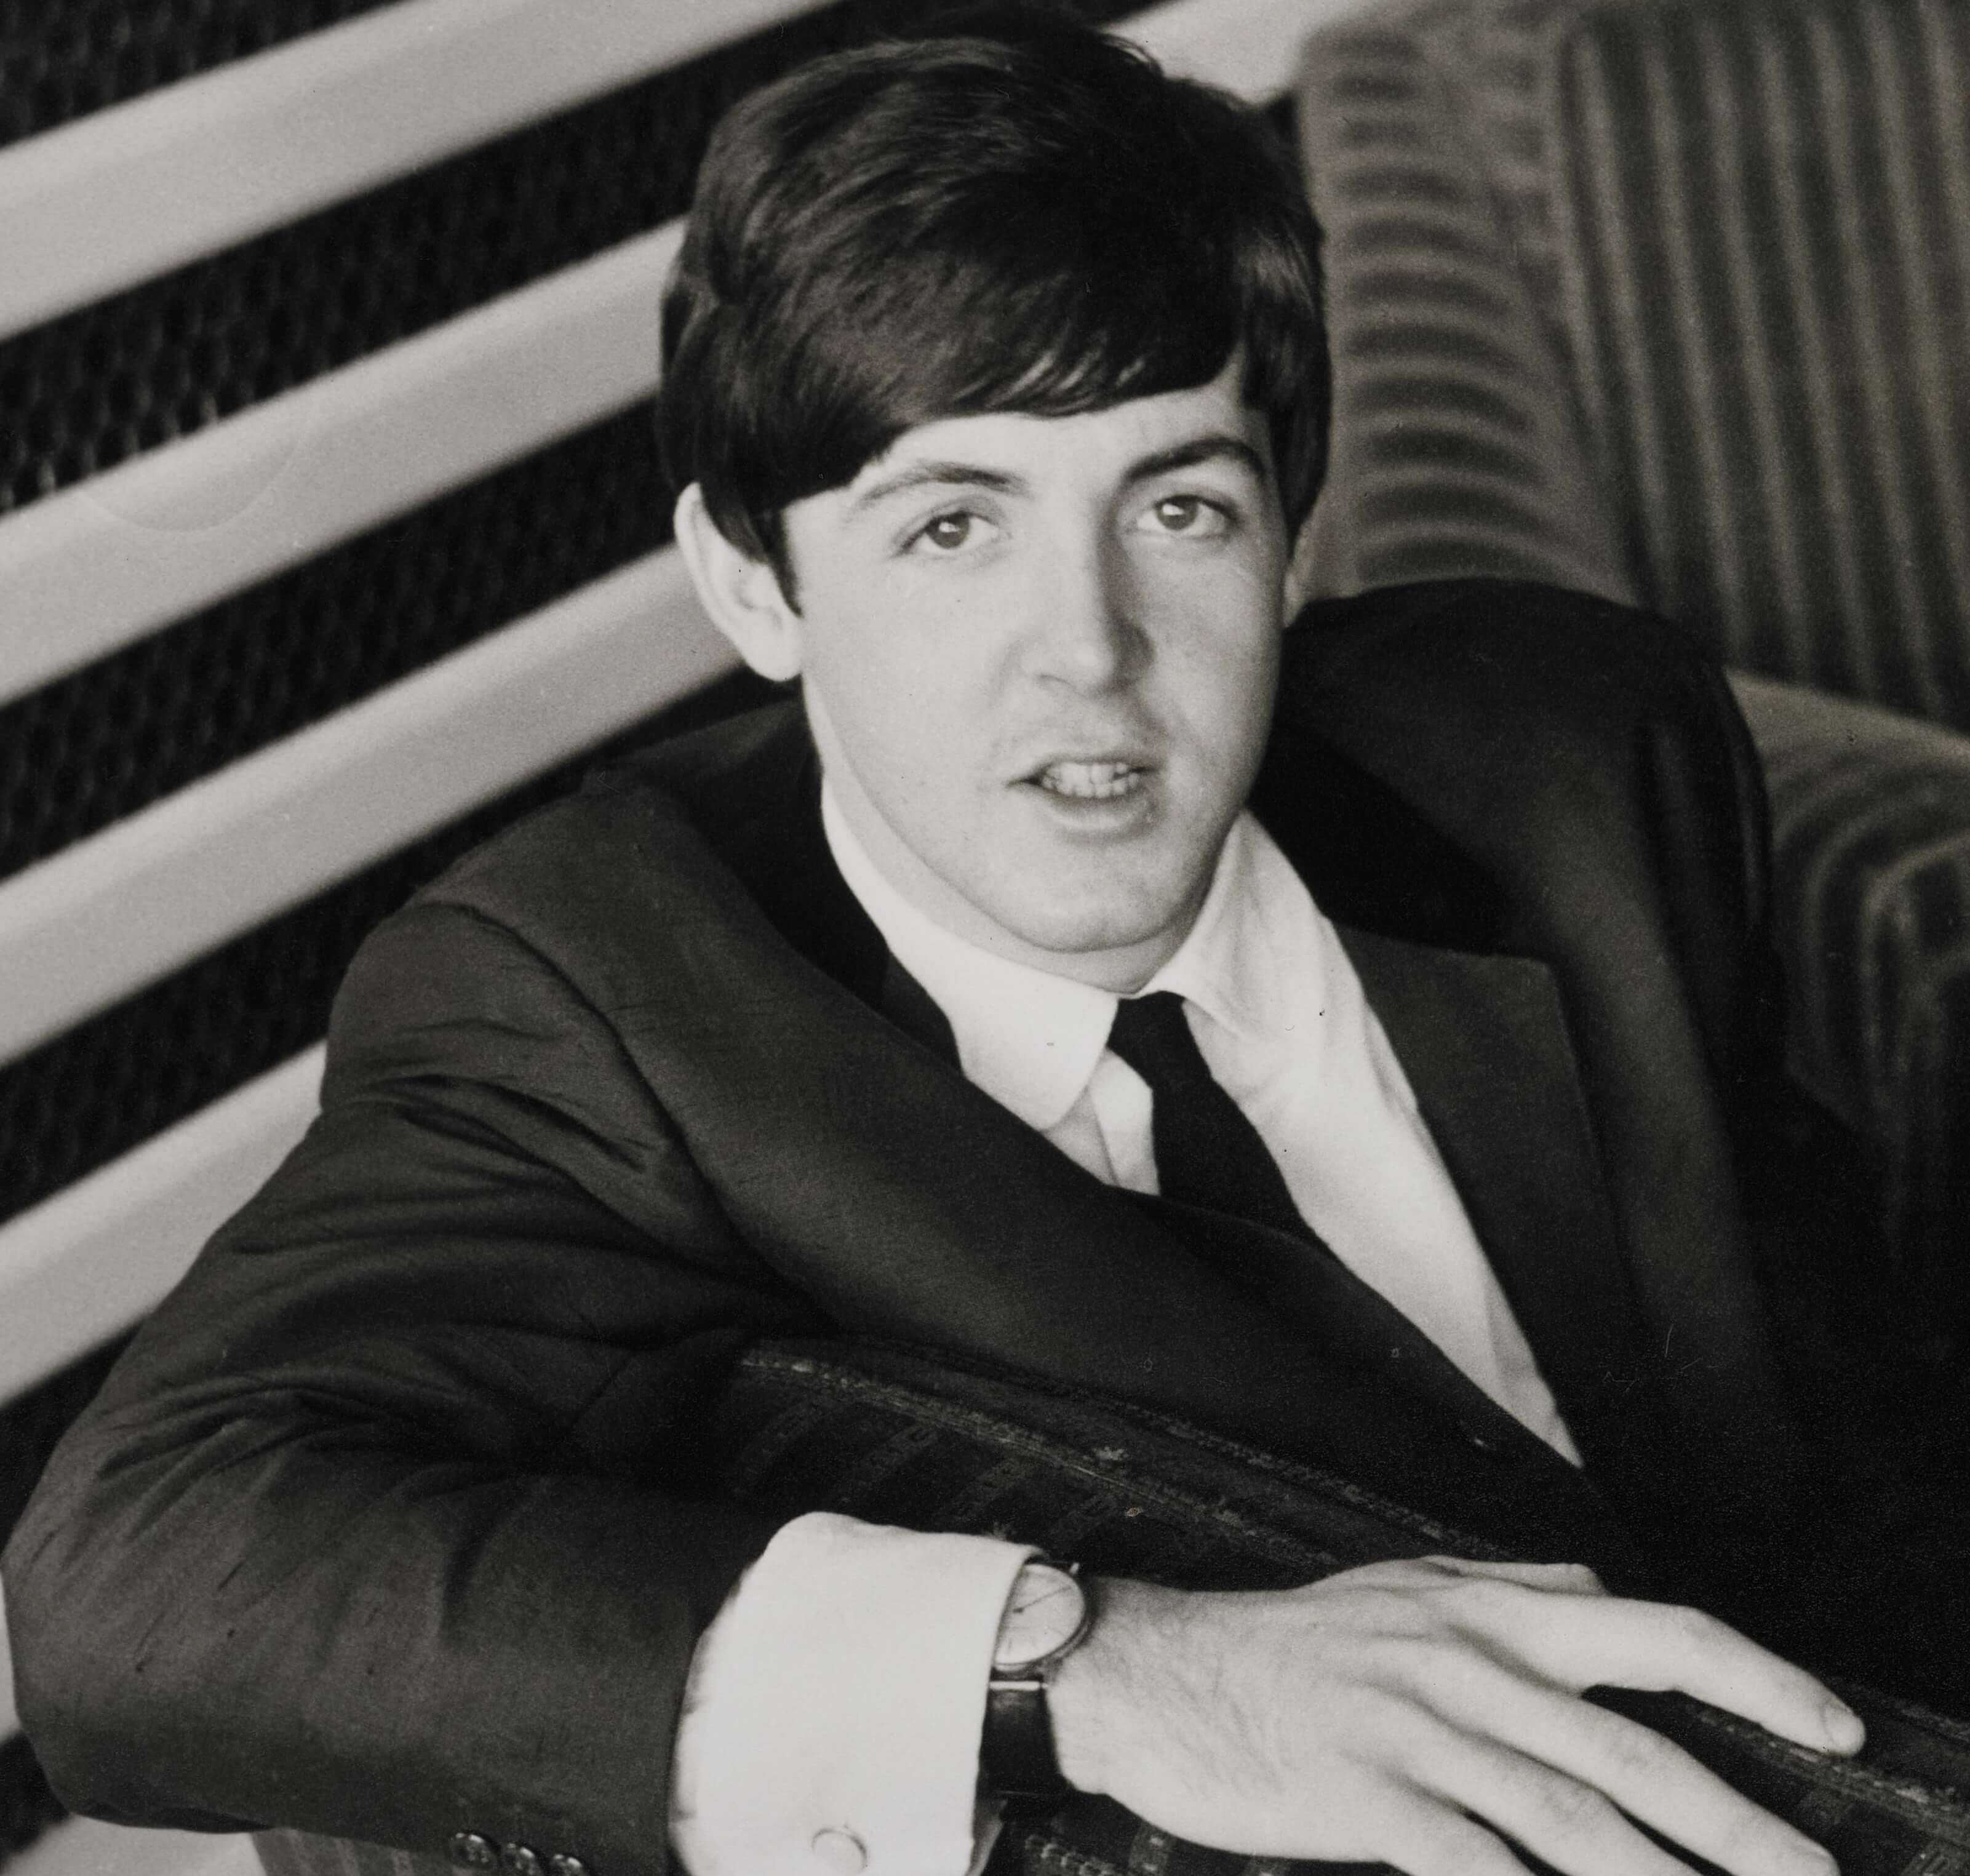 Paul McCartney in a suit